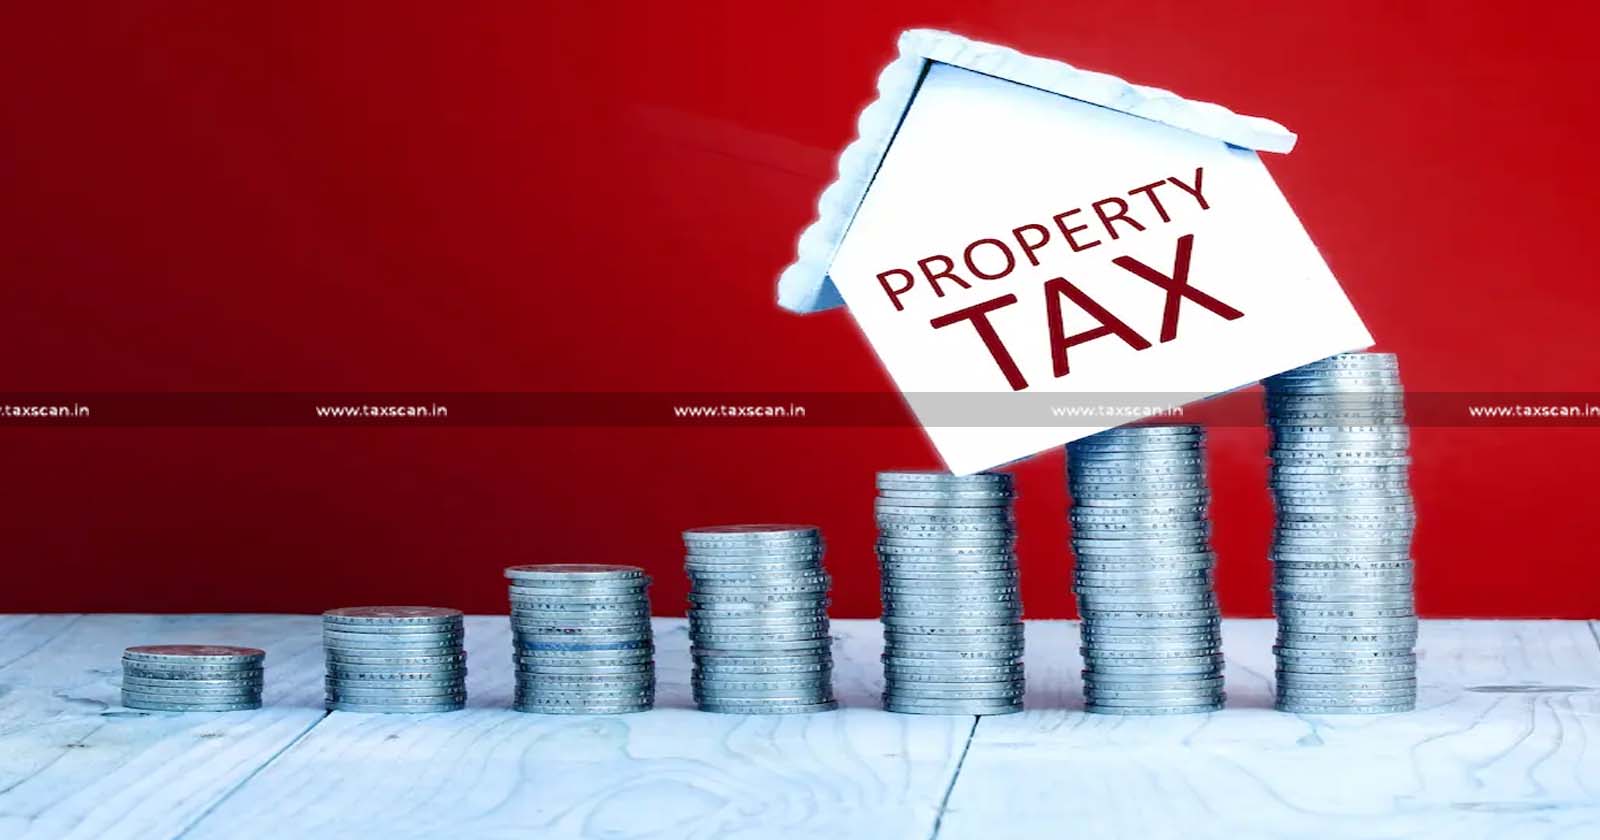 Chennai Corporation Fails to Issue Notice -Chennai Corporation - Reassessment - Notice - Municipal Corporation Act - Madras Highcourt - Property Tax Arrears